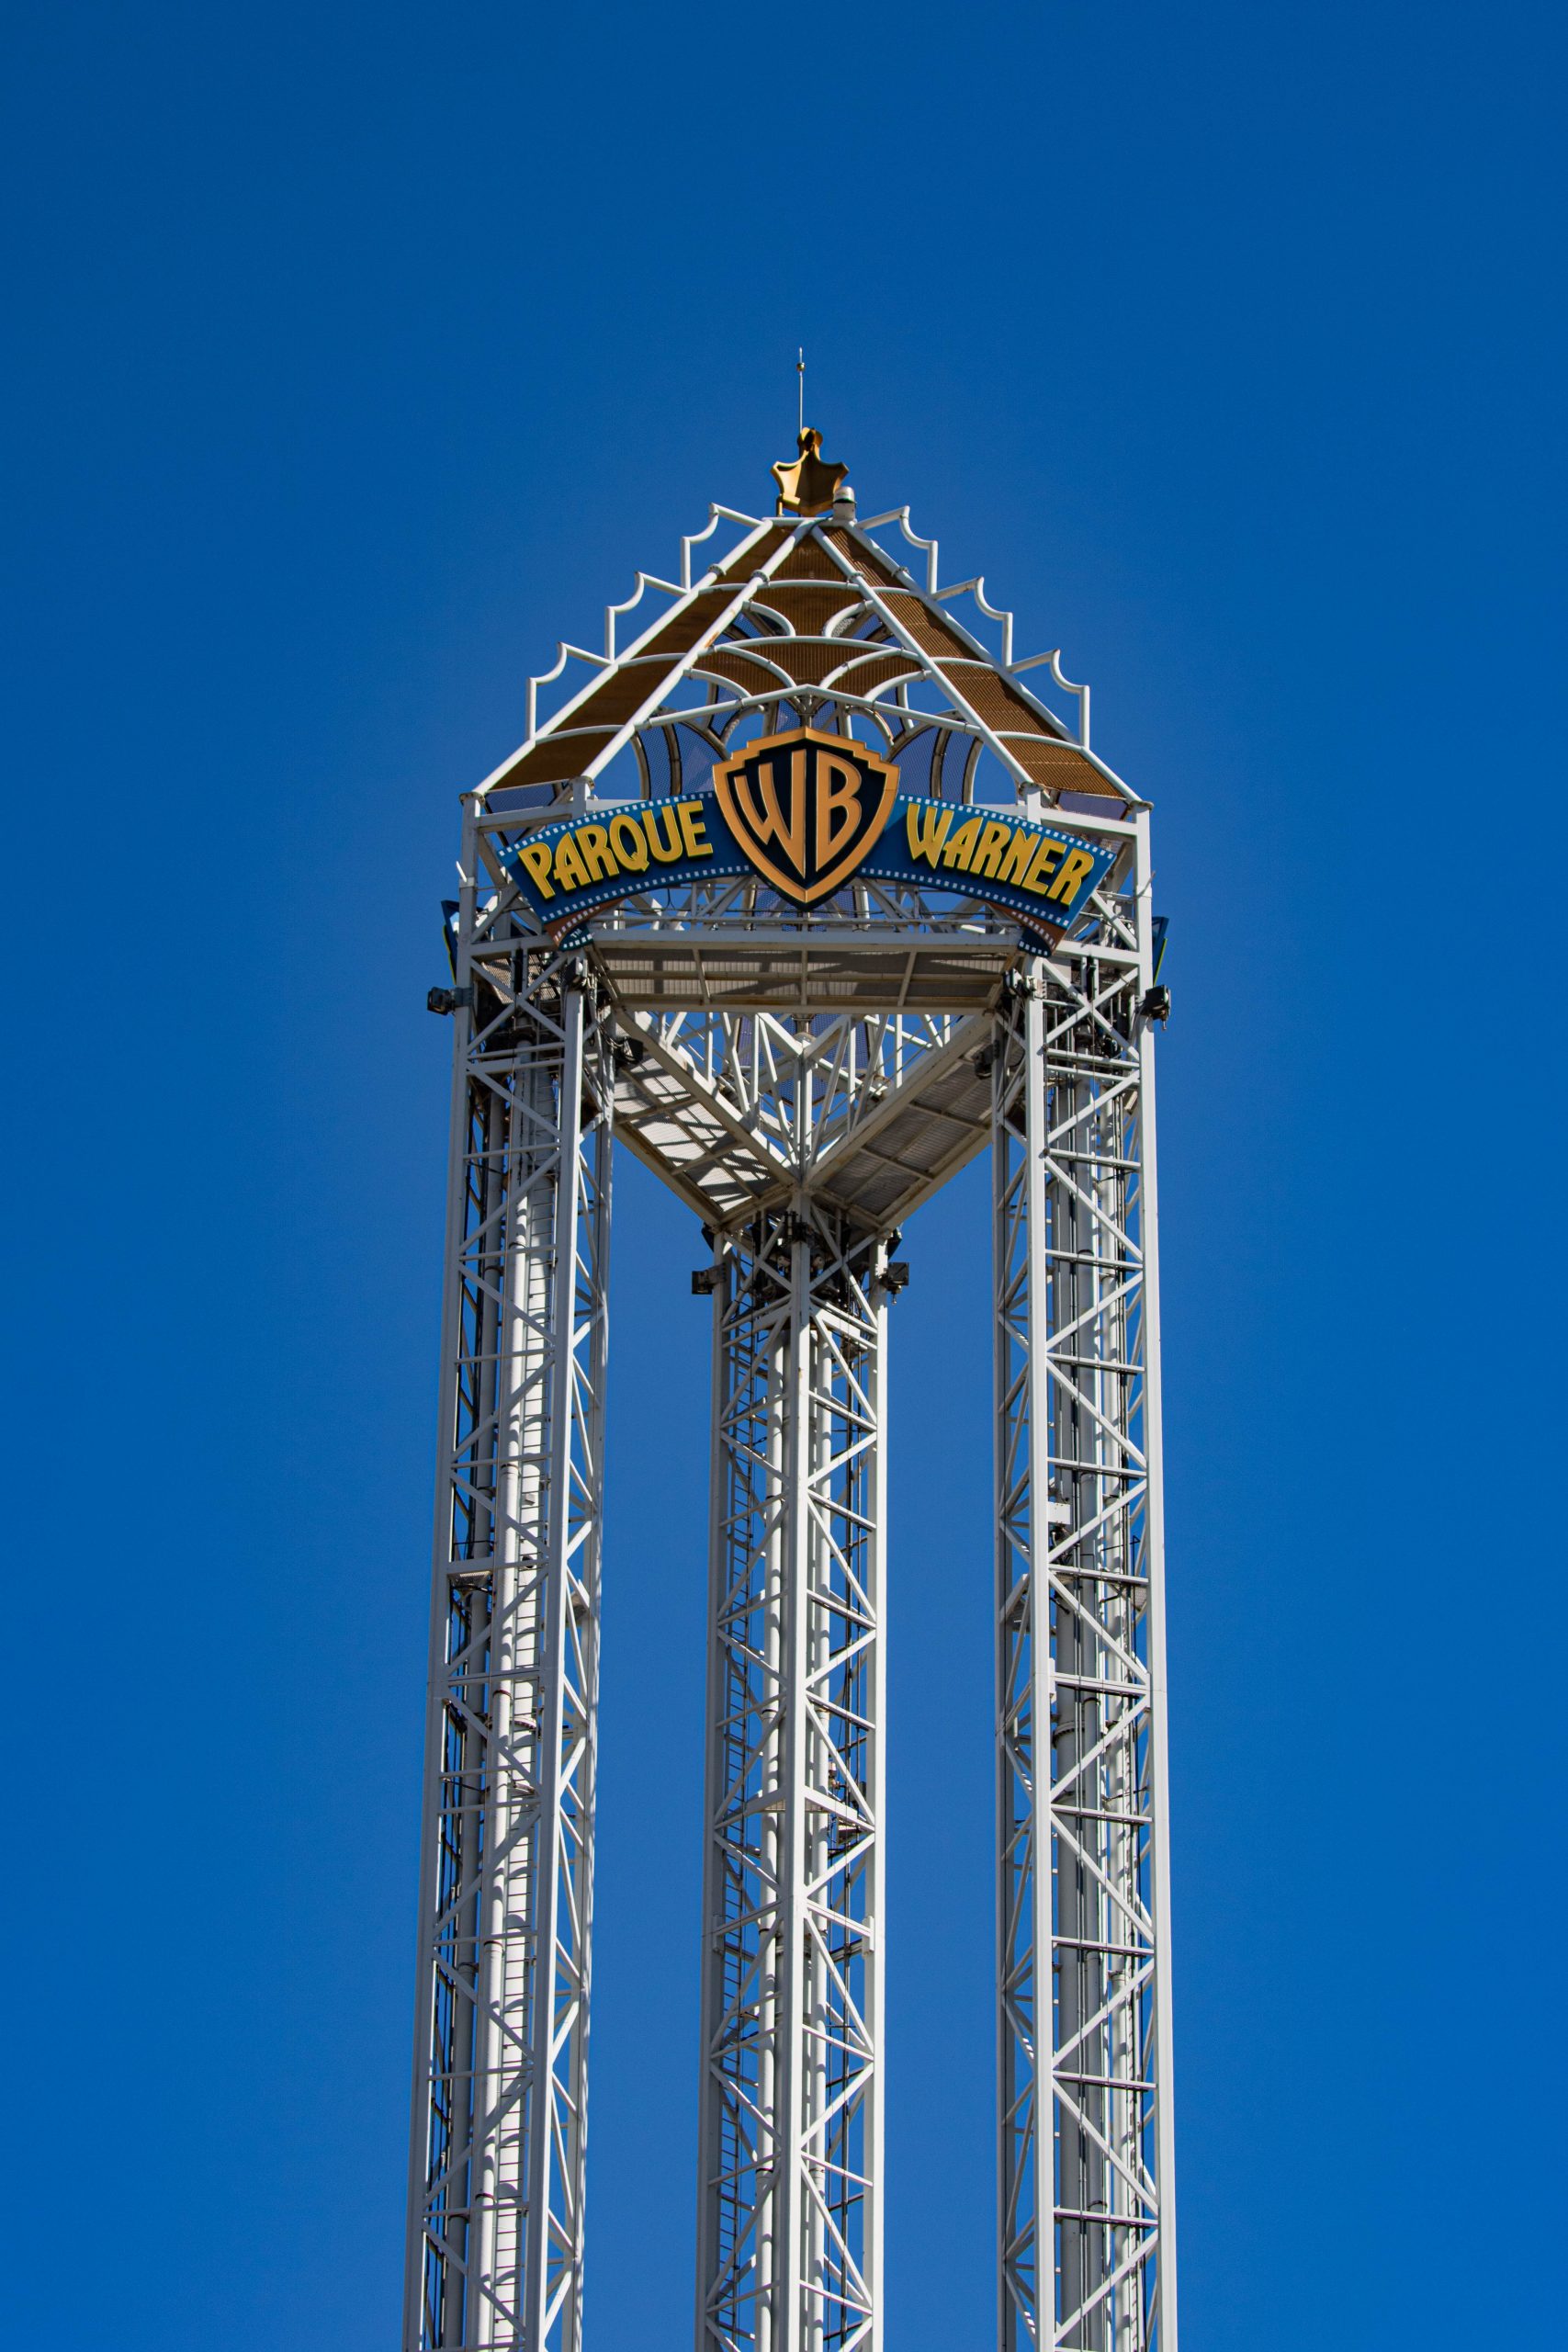 Parque Warner Madrid 2020 - Warner Bros Park - Theme Park Spain (España) 